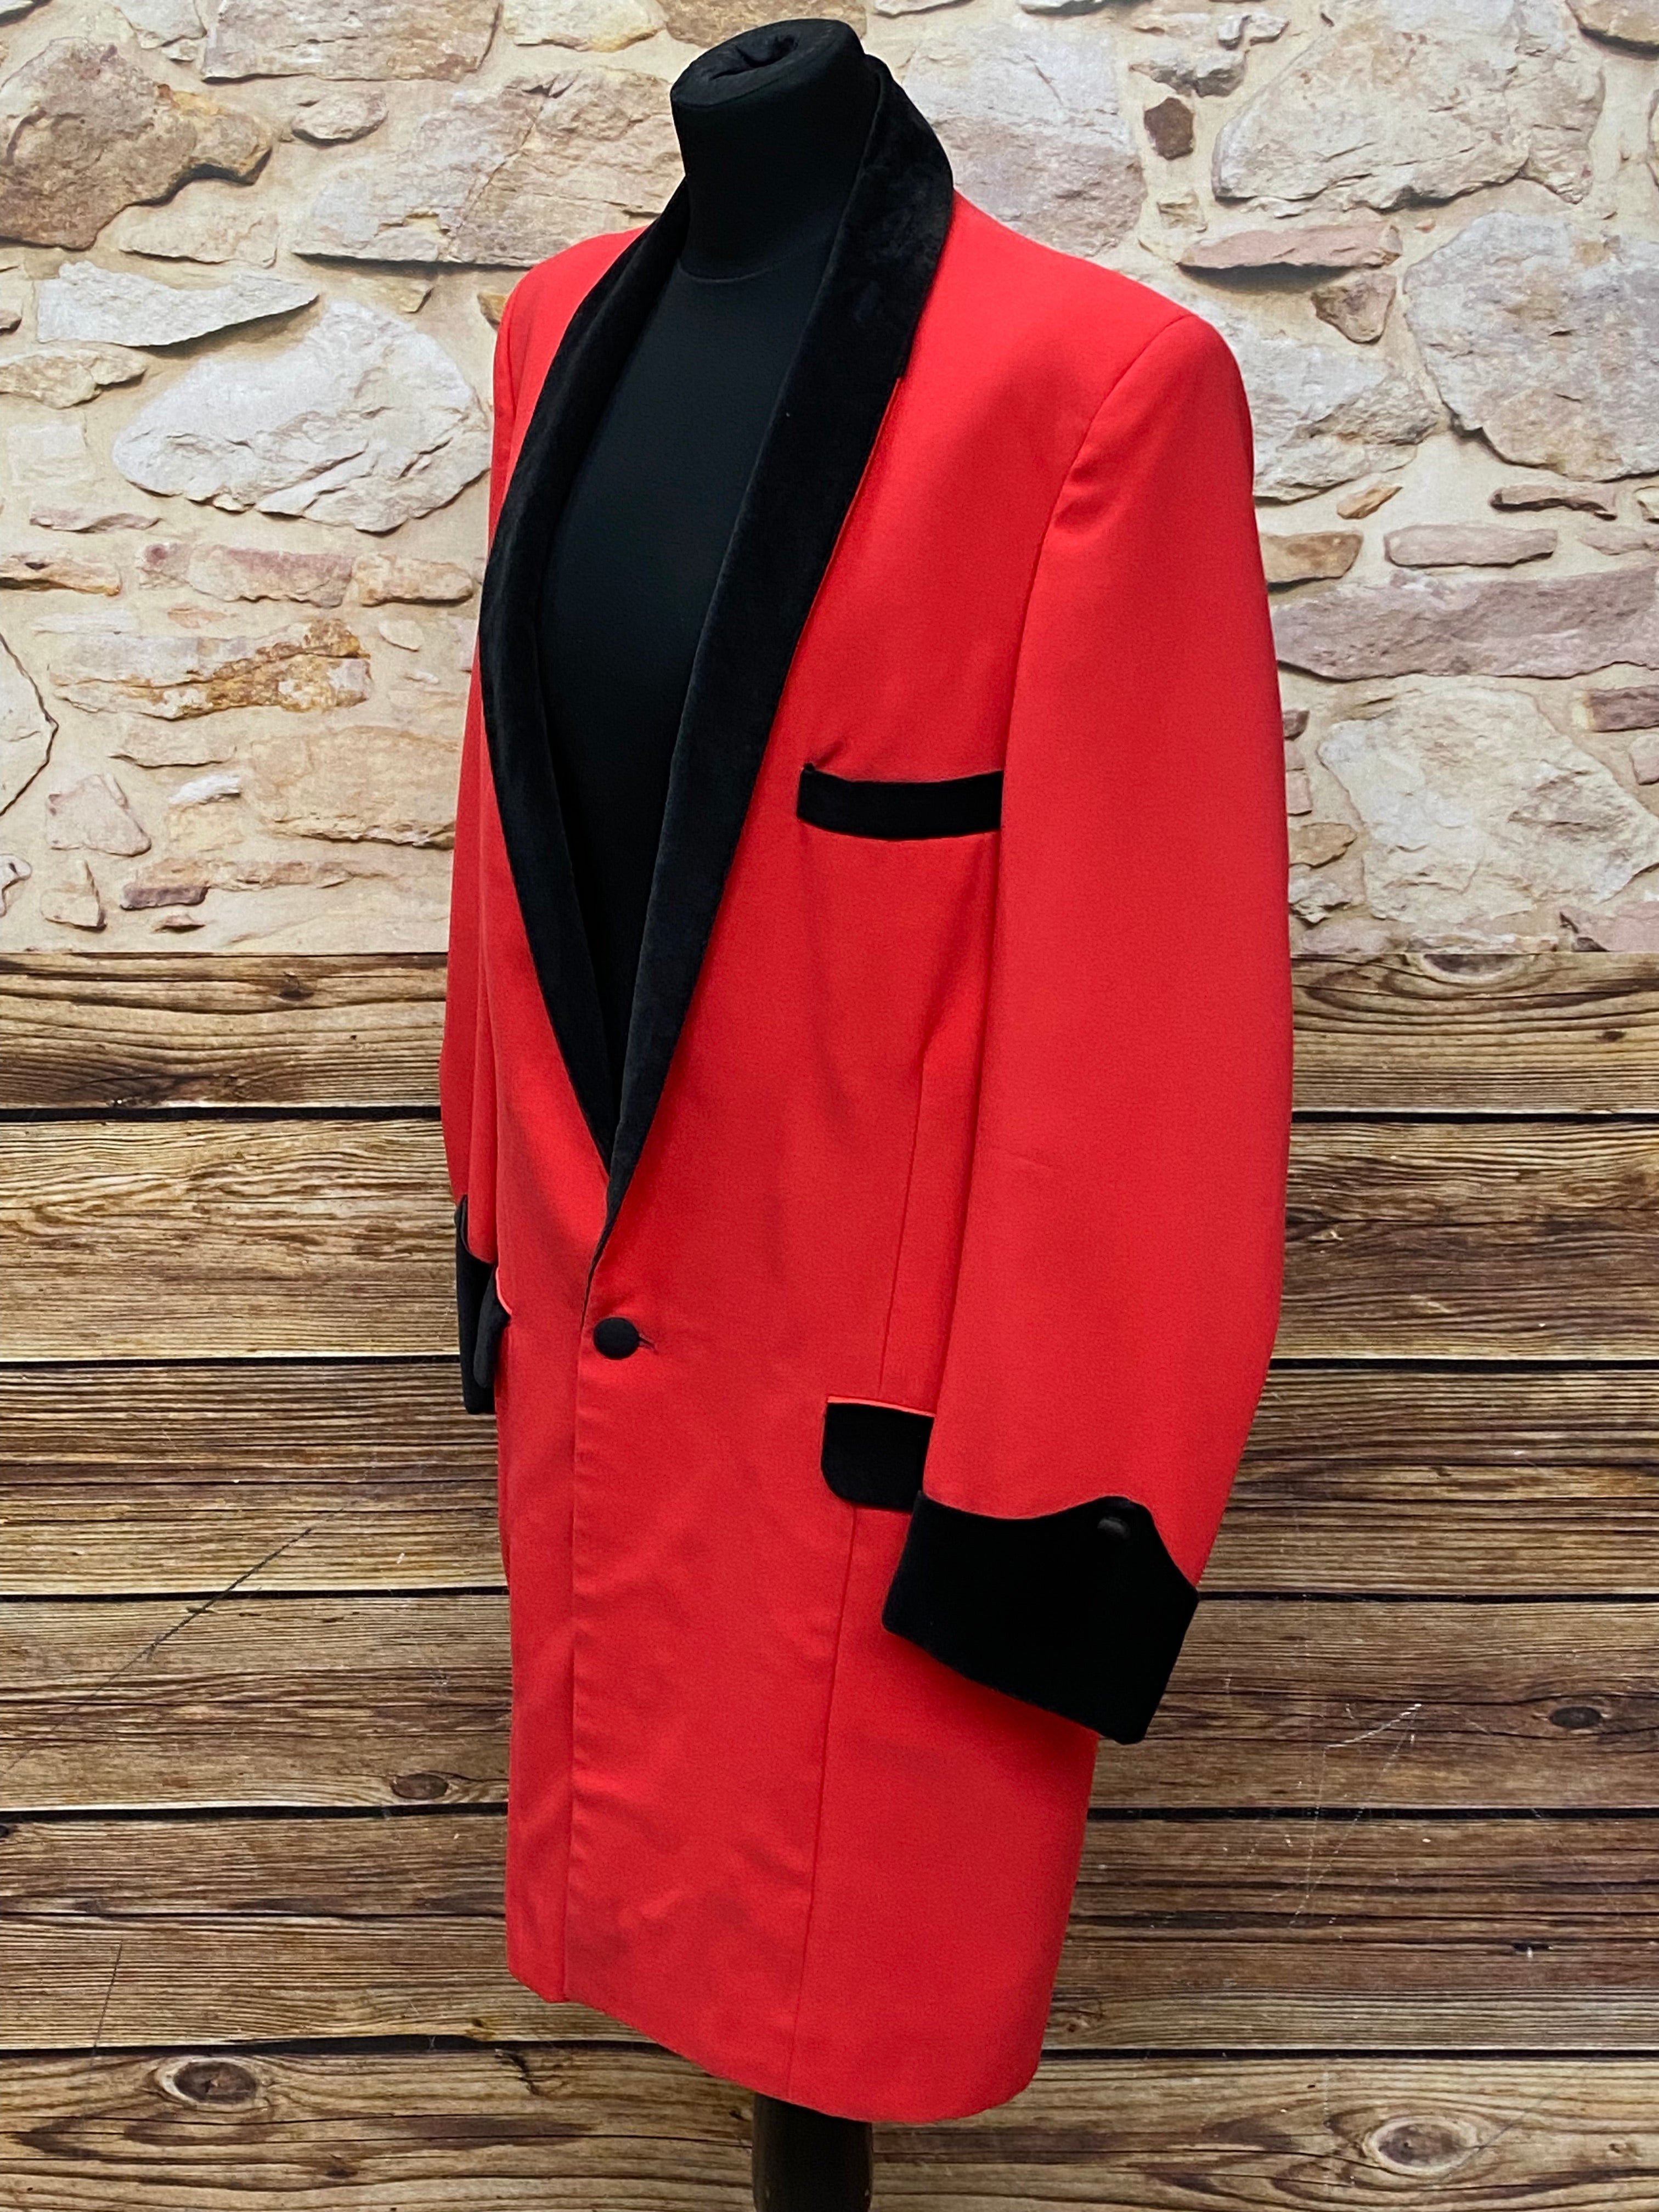 Teddyboy Jacket, Rockabilly 50er Jahre, Long Jackett Gr.48, rot/schwarz